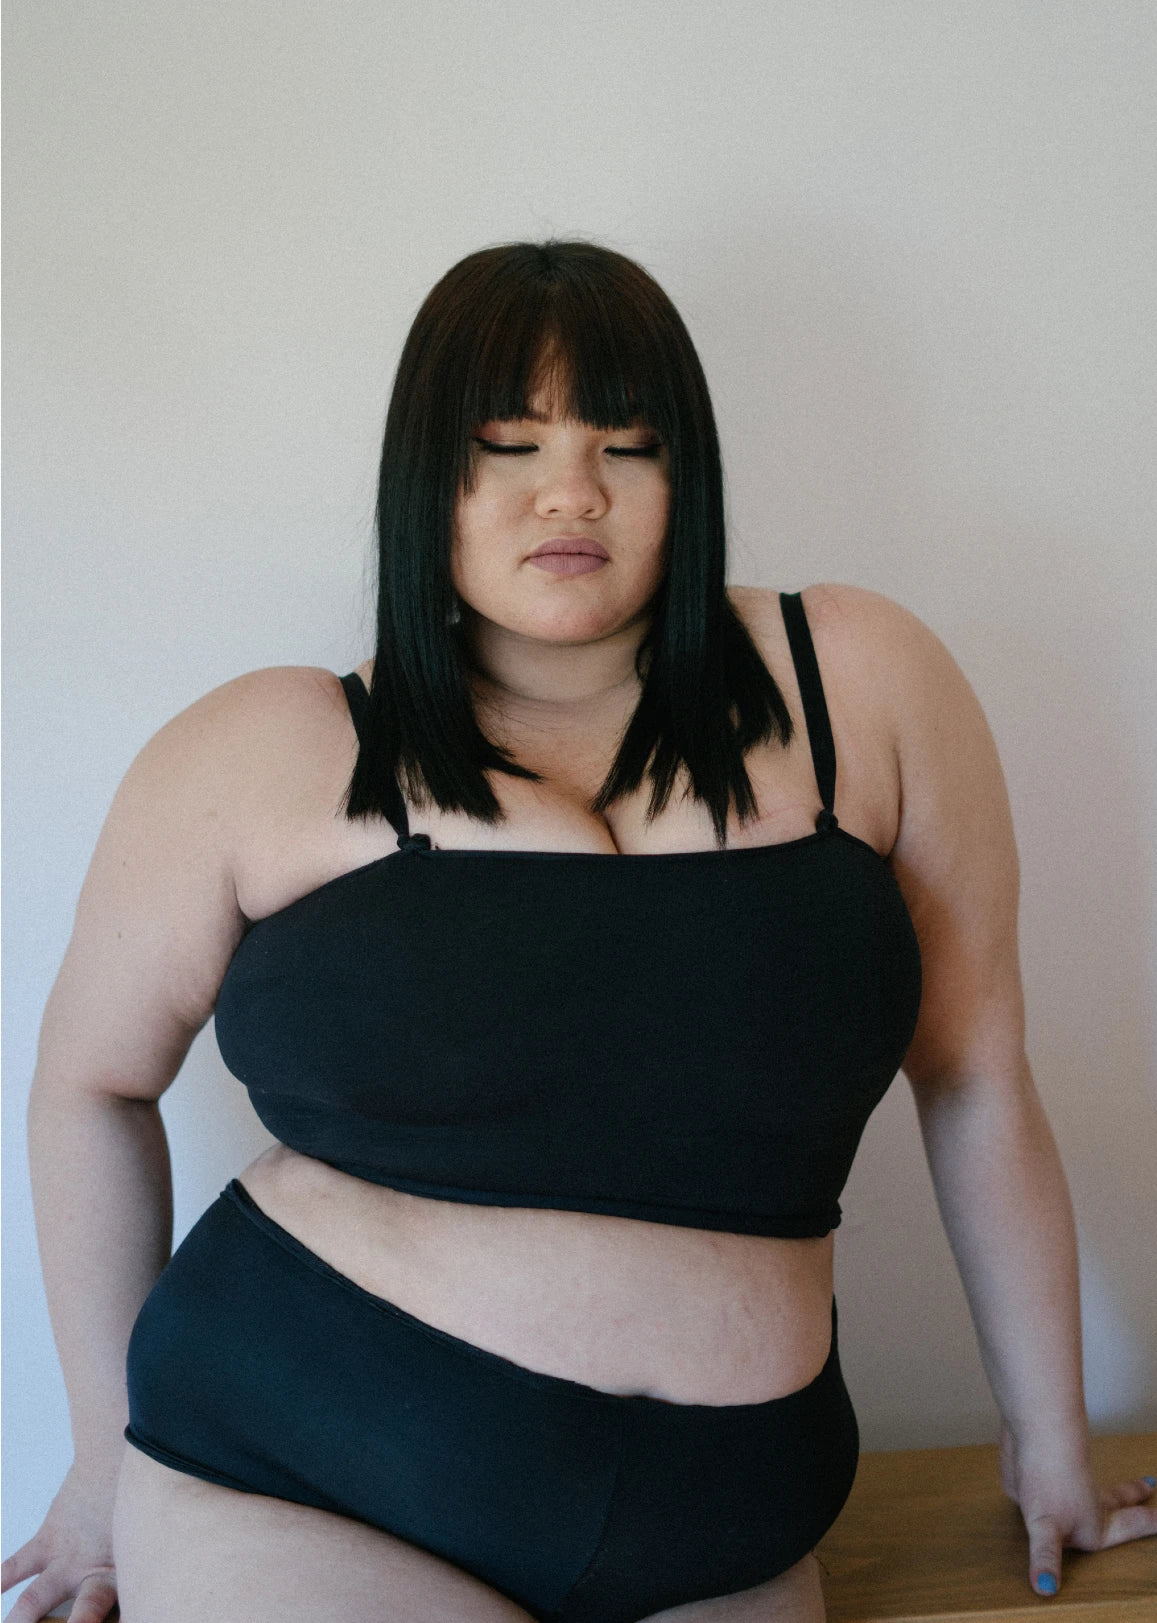 Woman seeking body transformation